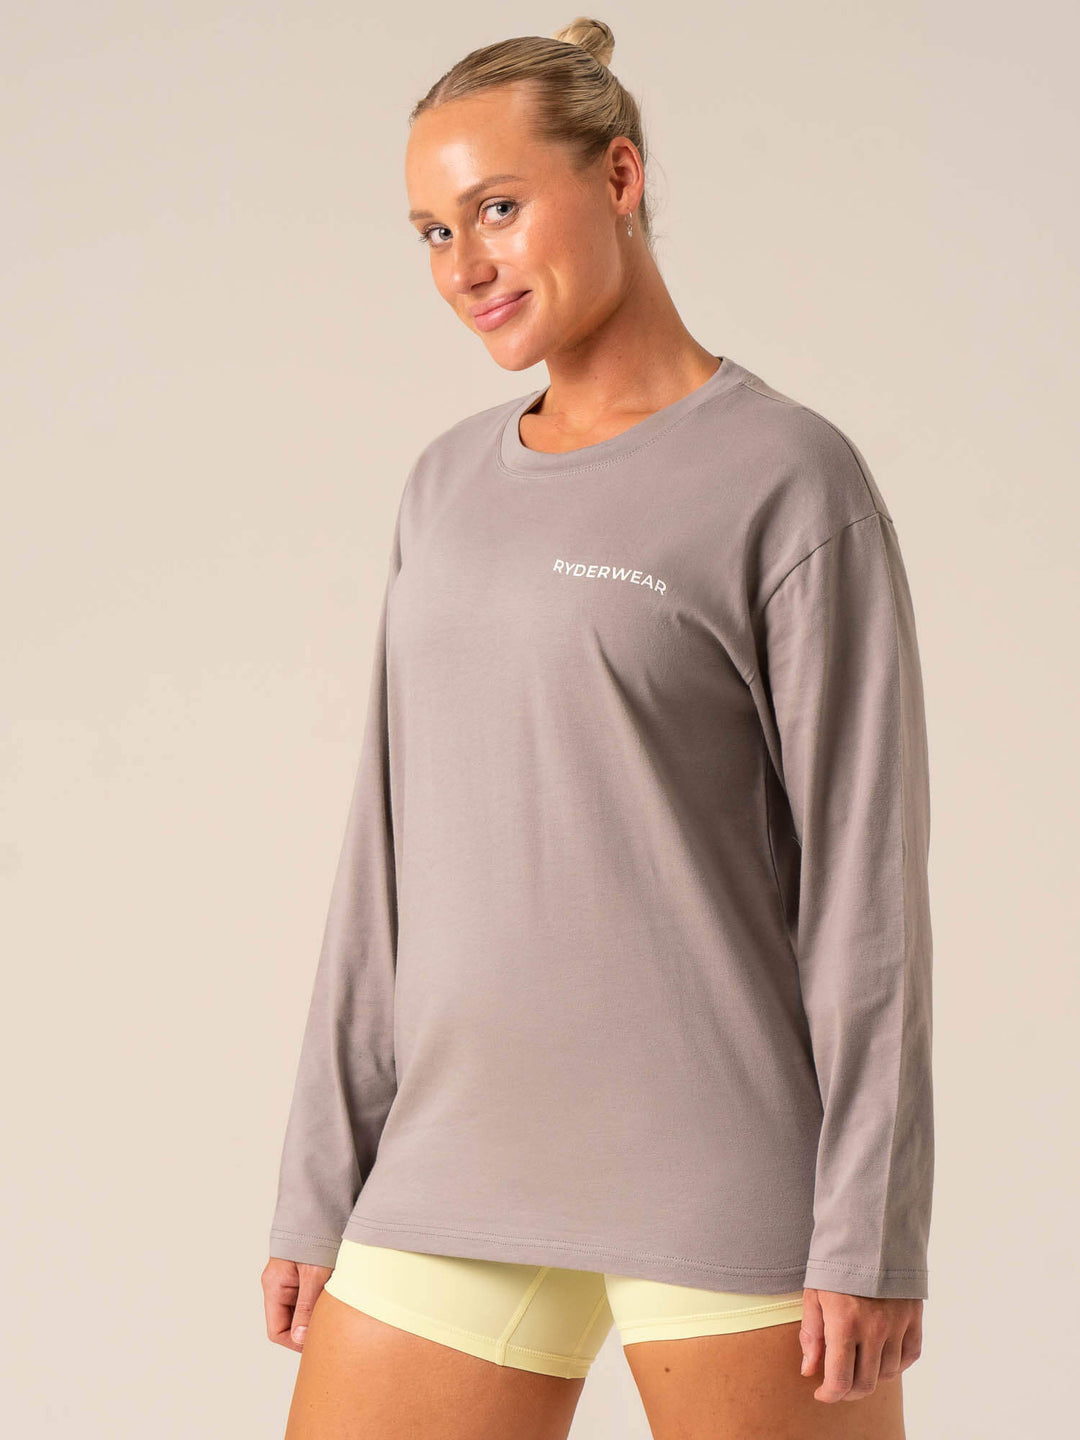 Embody Oversized Long Sleeve T-Shirt - Steel Grey Clothing Ryderwear 